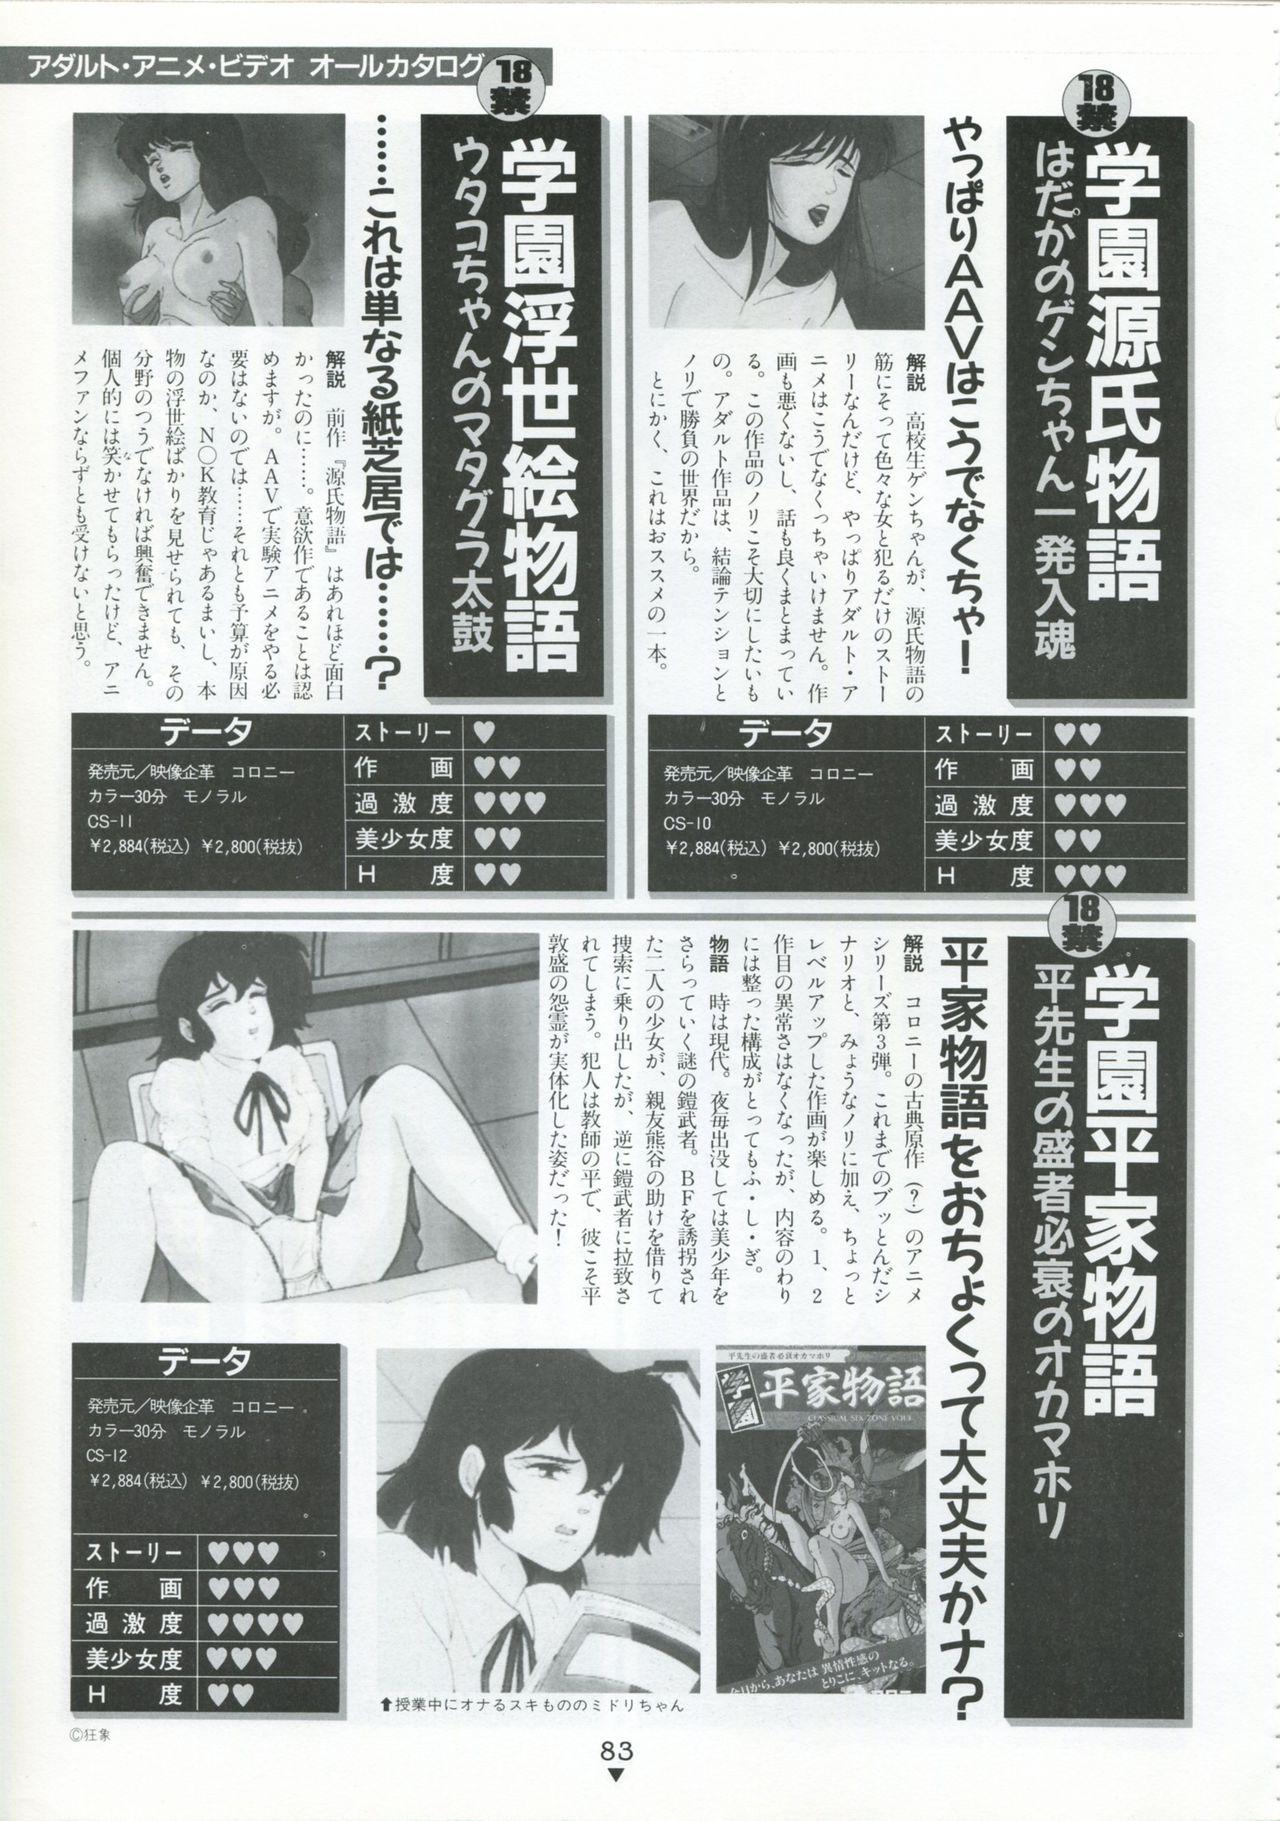 Bishoujo Anime Daizenshuu - Adult Animation Video Catalog 1991 78